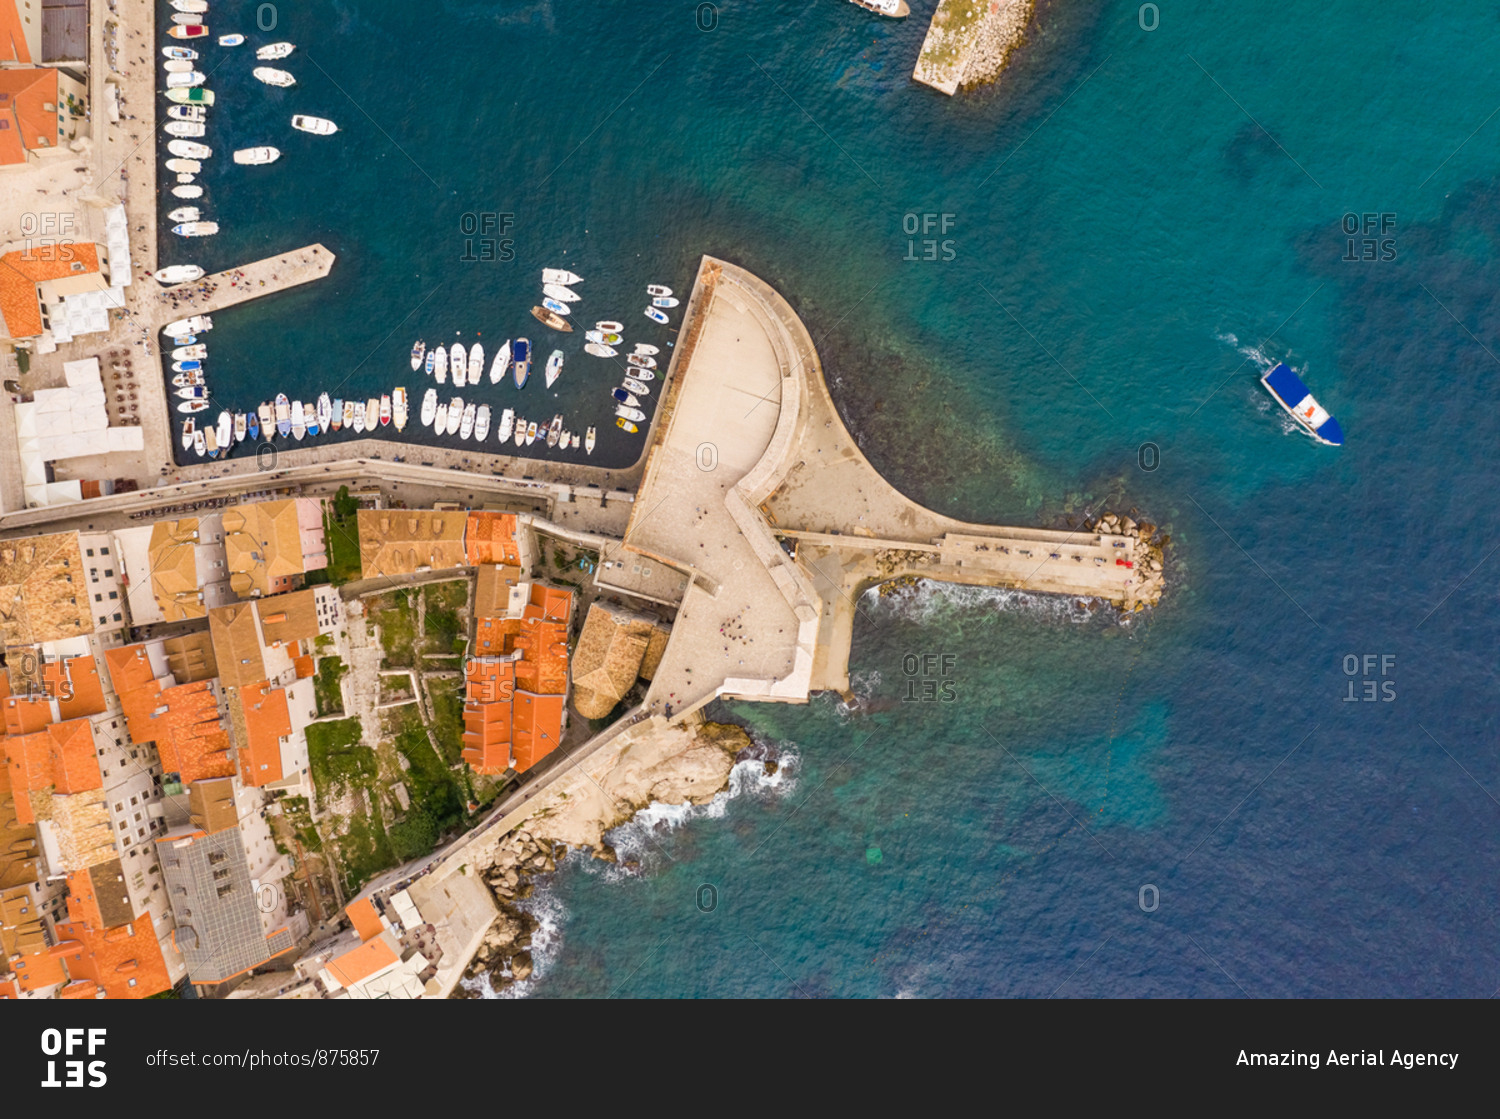 Aerial view of boat sailing near Dubrovnik old town, Croatia.